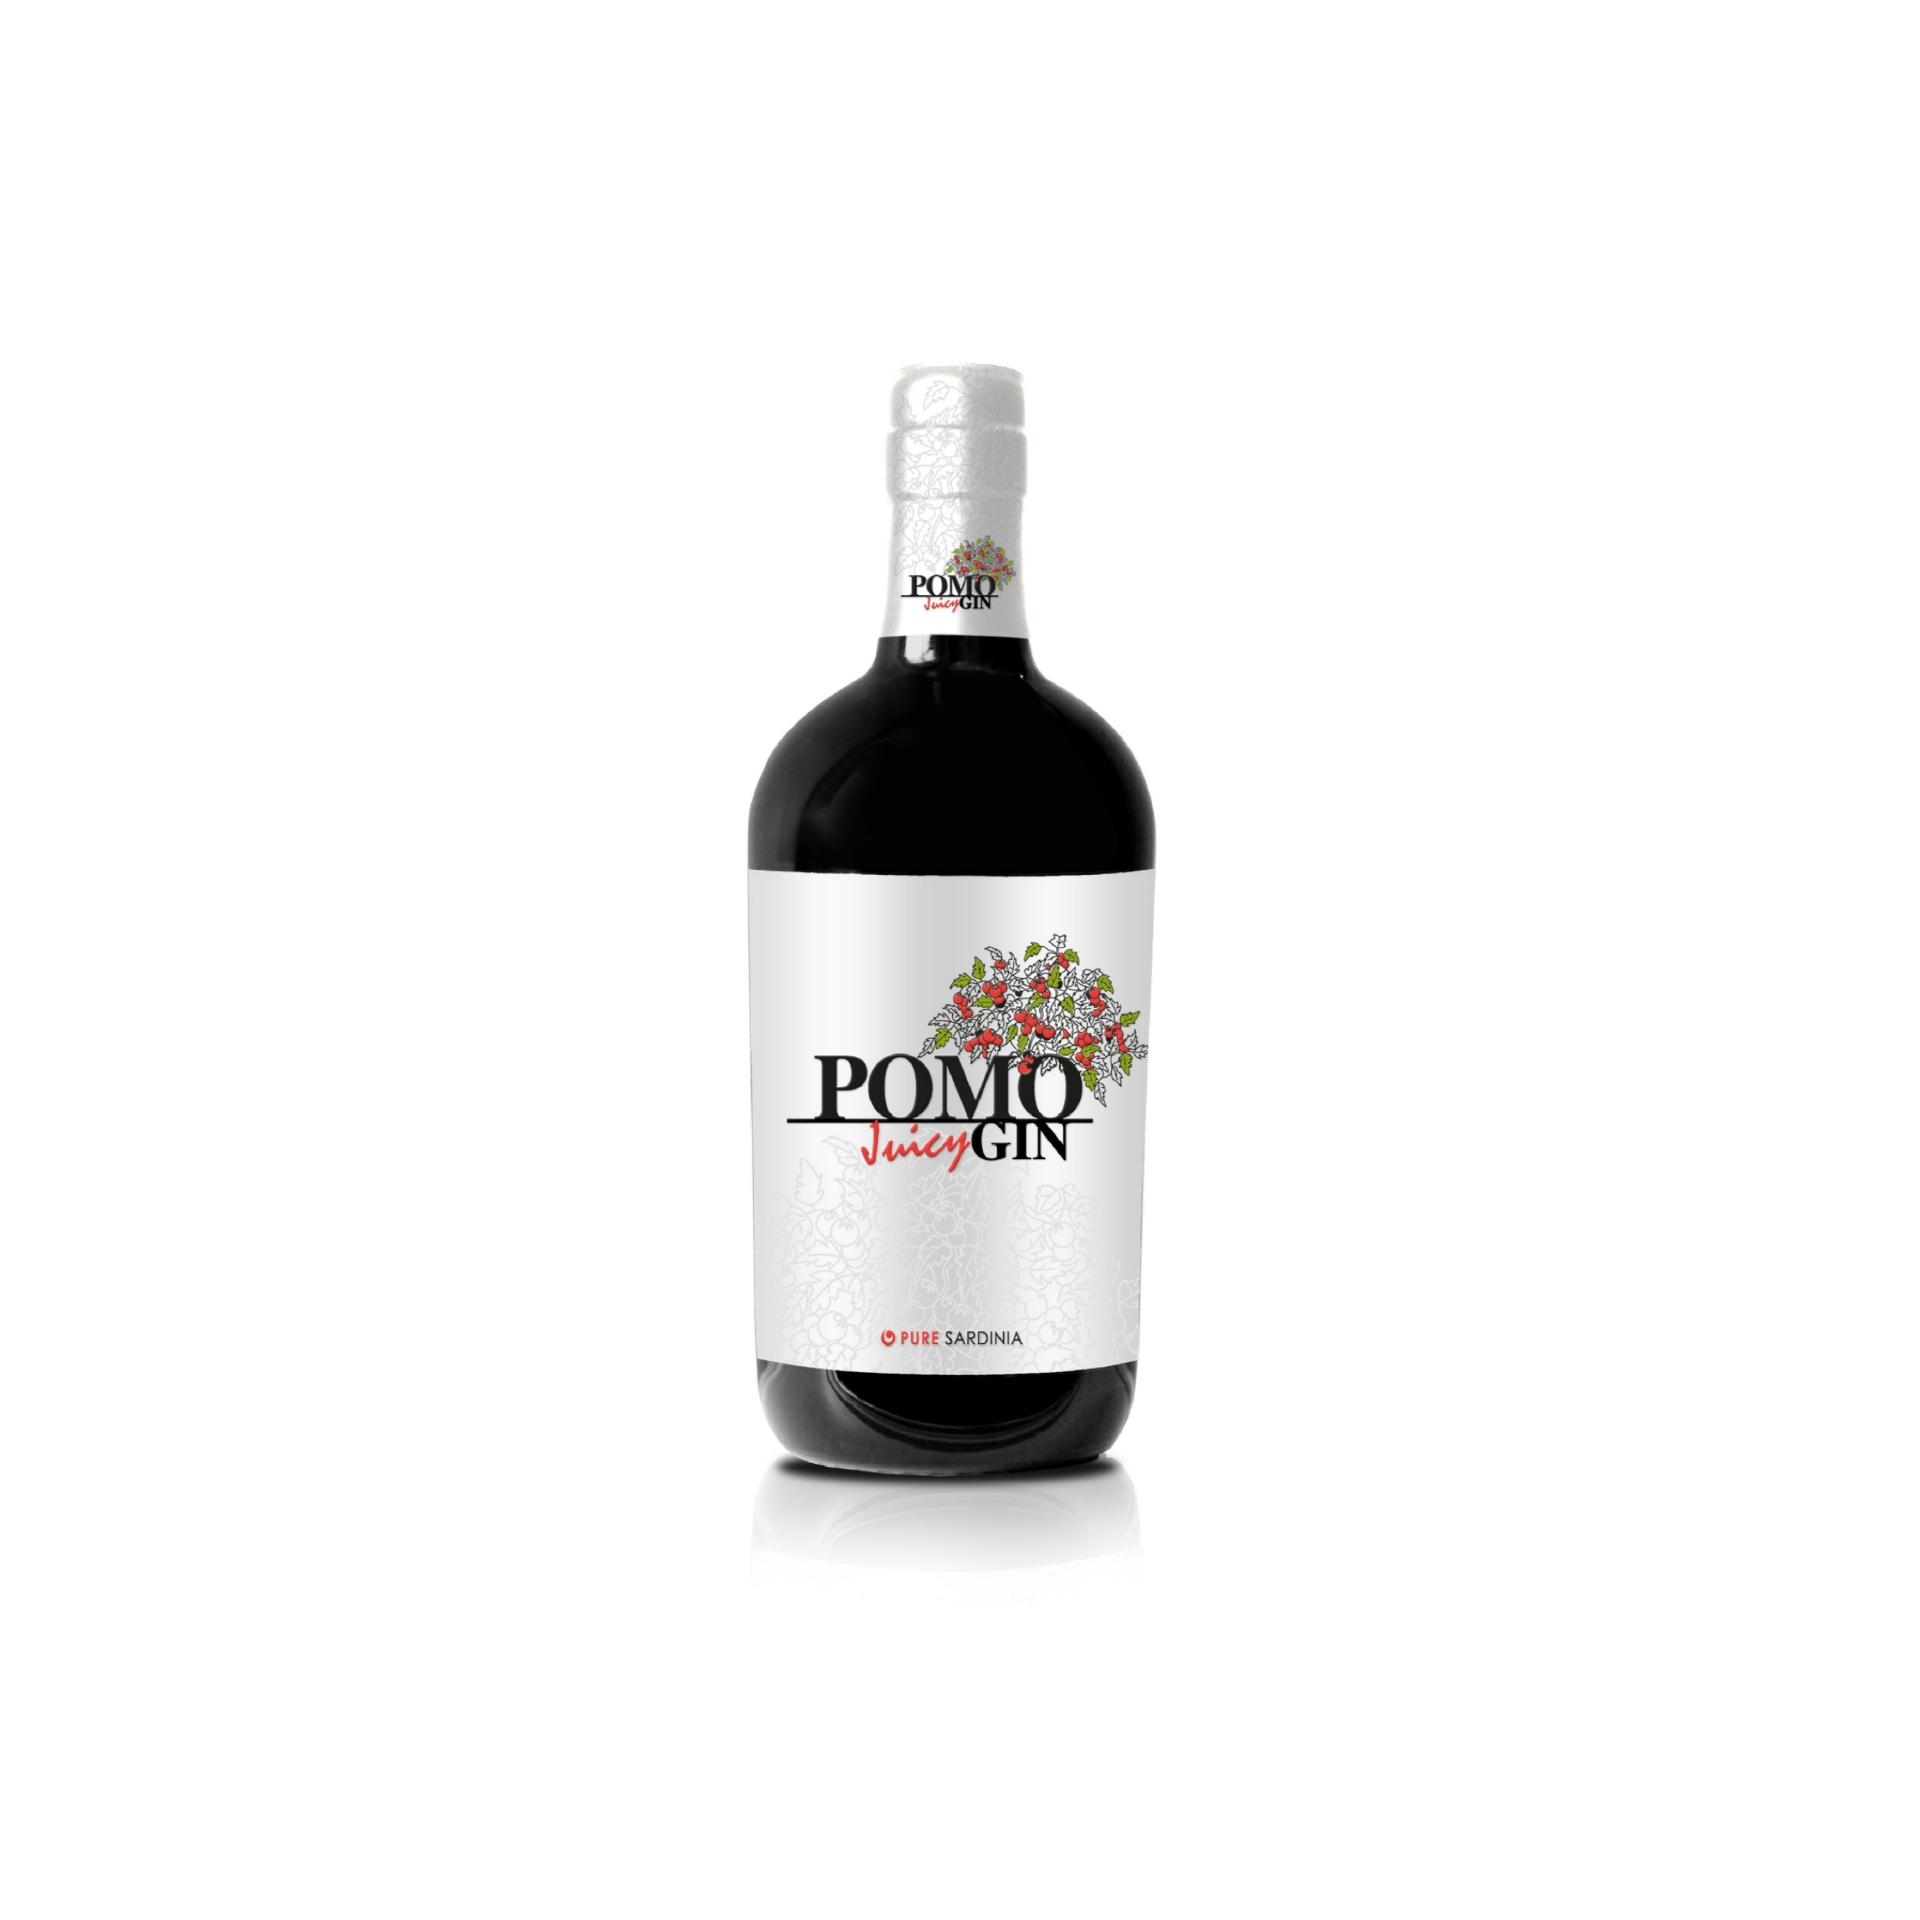 Polo Juicy Gin Pure Sardinia 700 ml